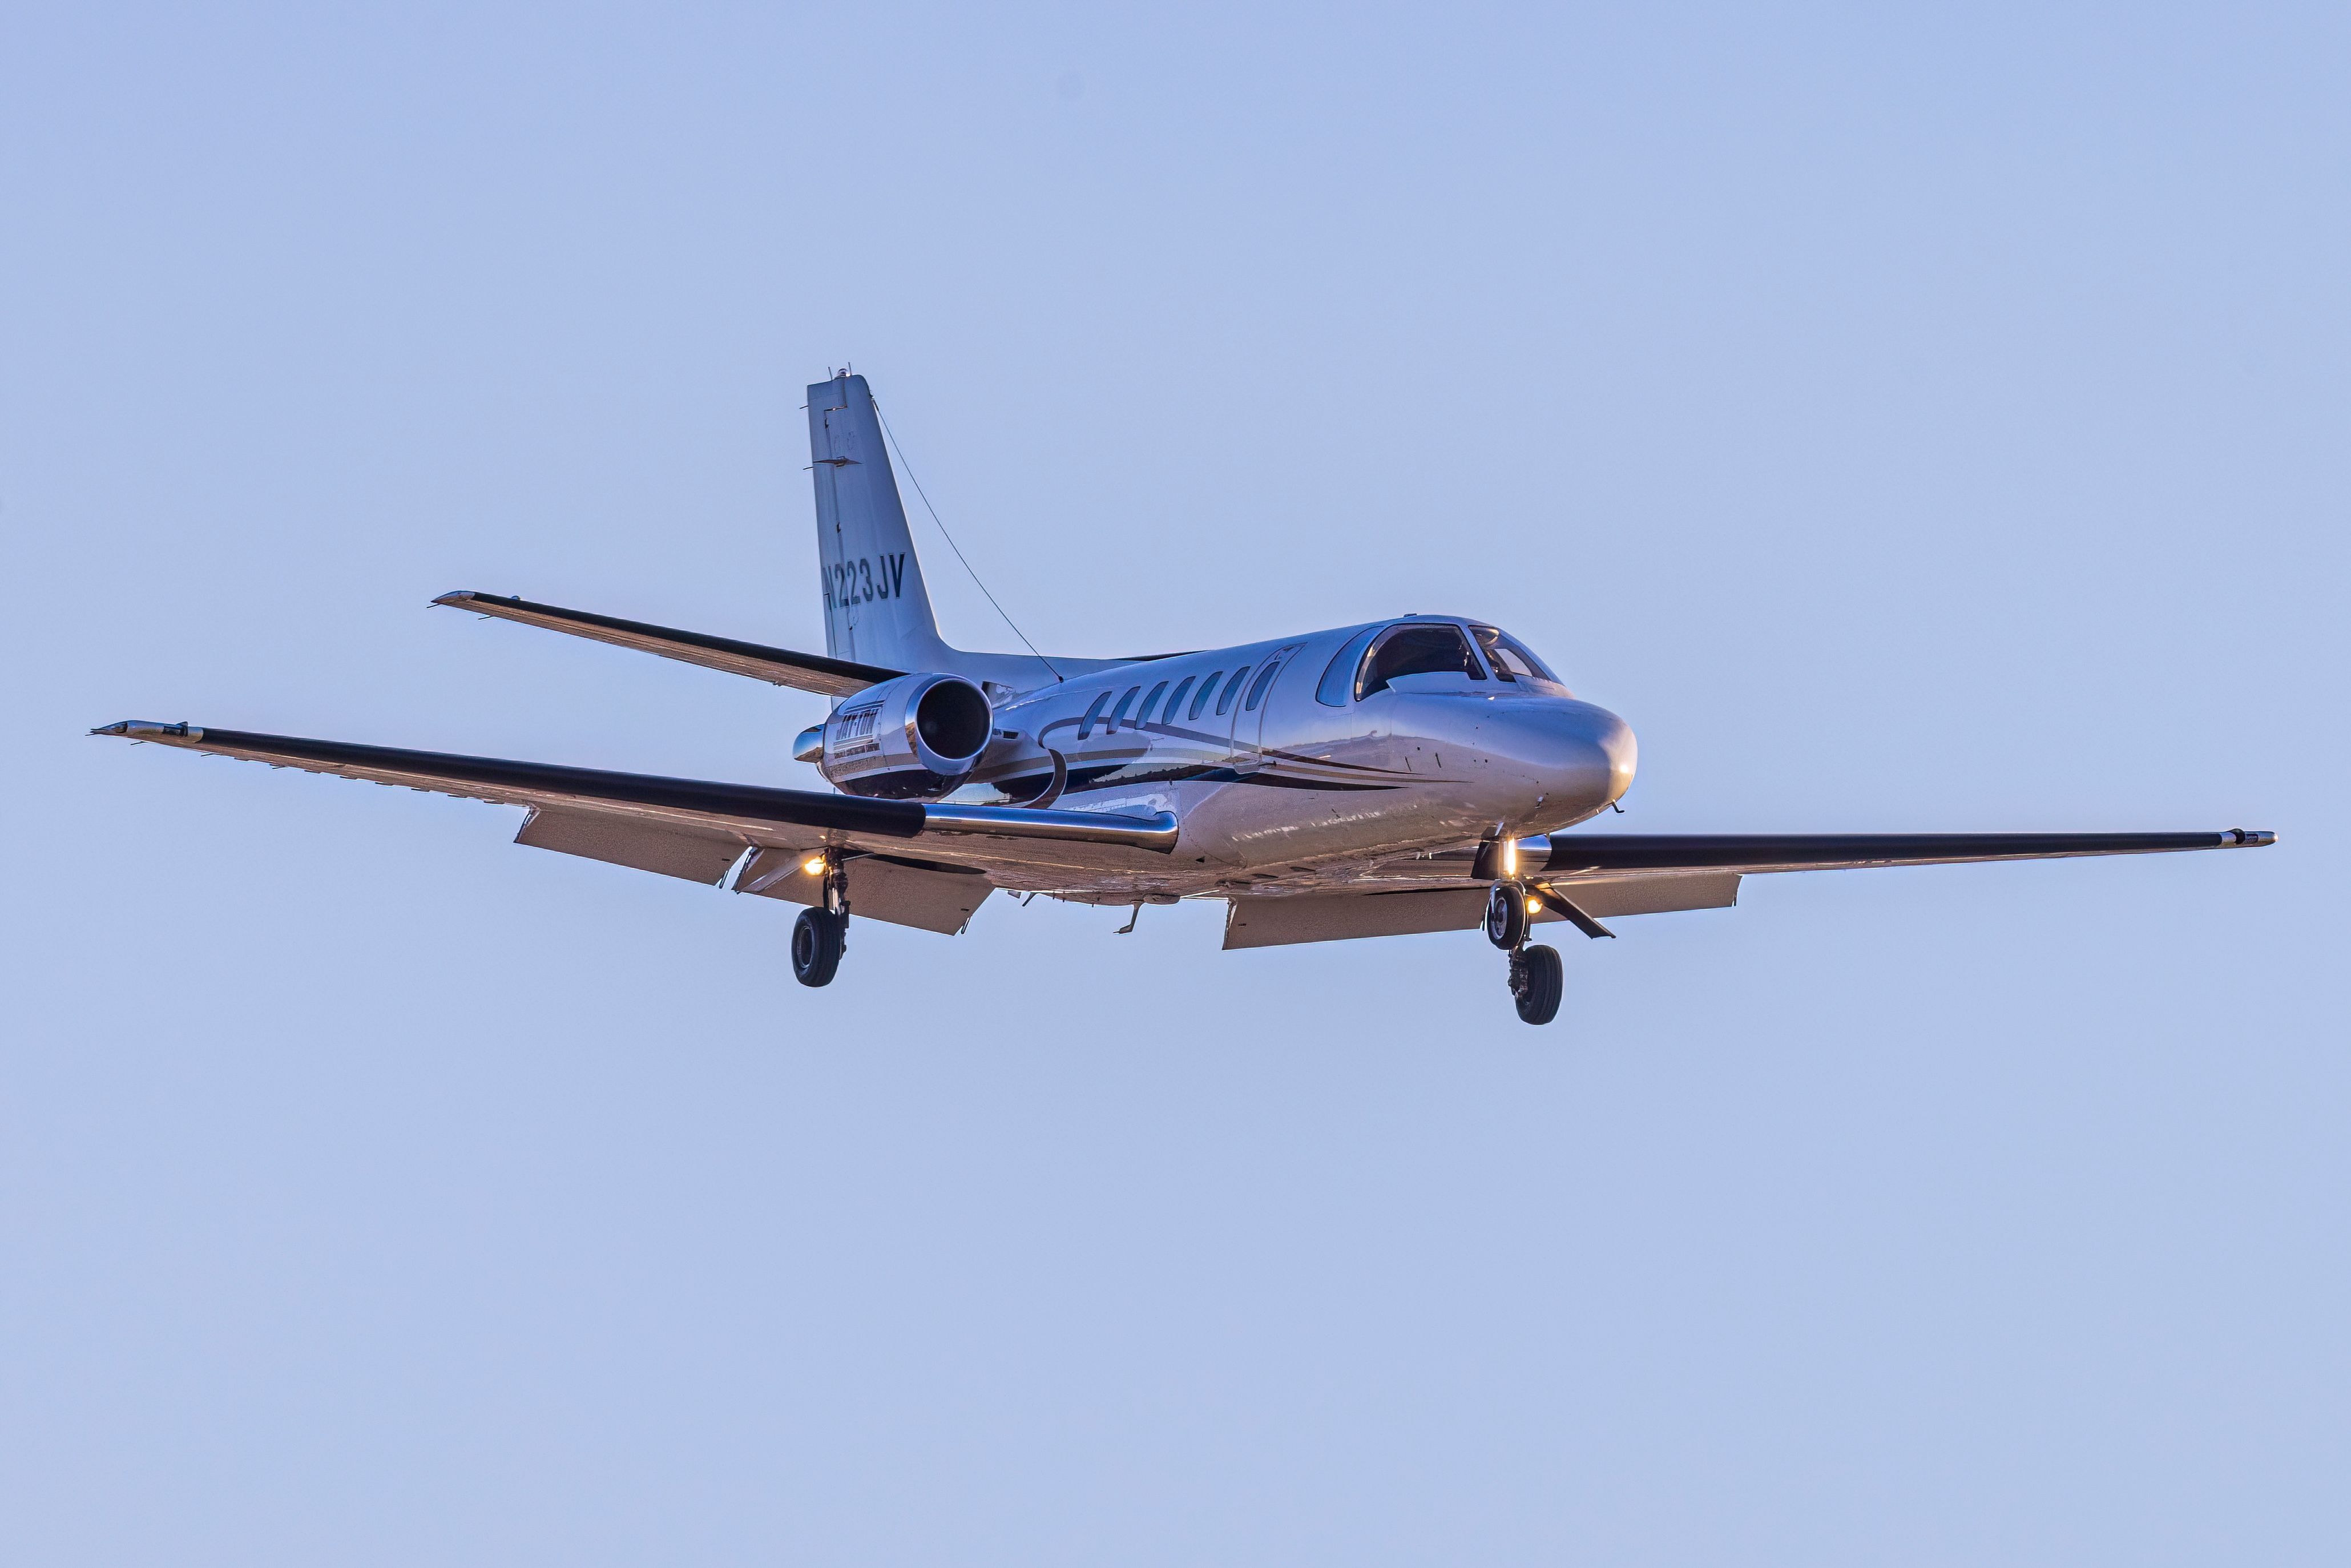 A Cessna Citation V flying in the sky.